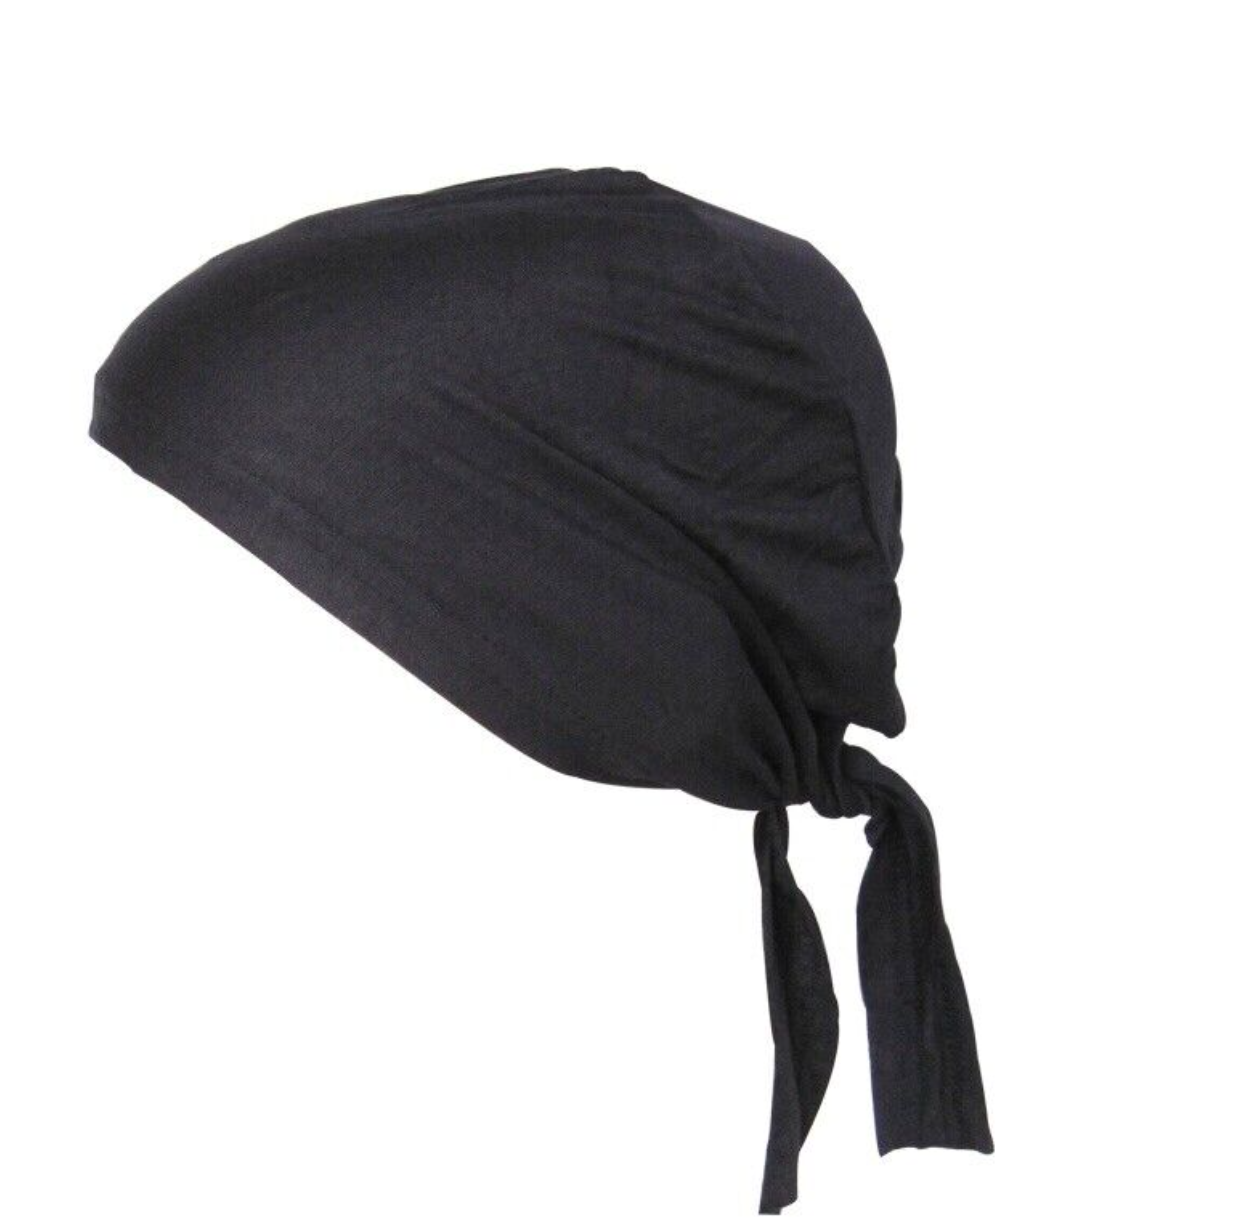 Hijab under hat -  Tie back Style